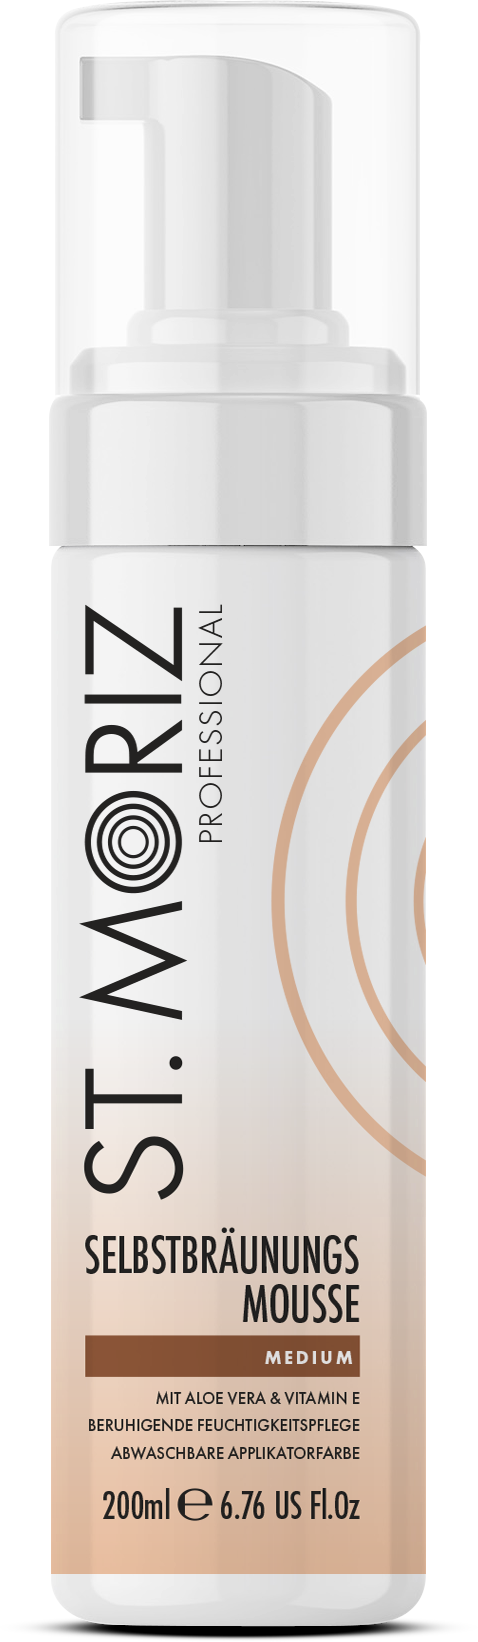 St. Moriz Professional Selbstbräunungs-Mousse Medium 200ml